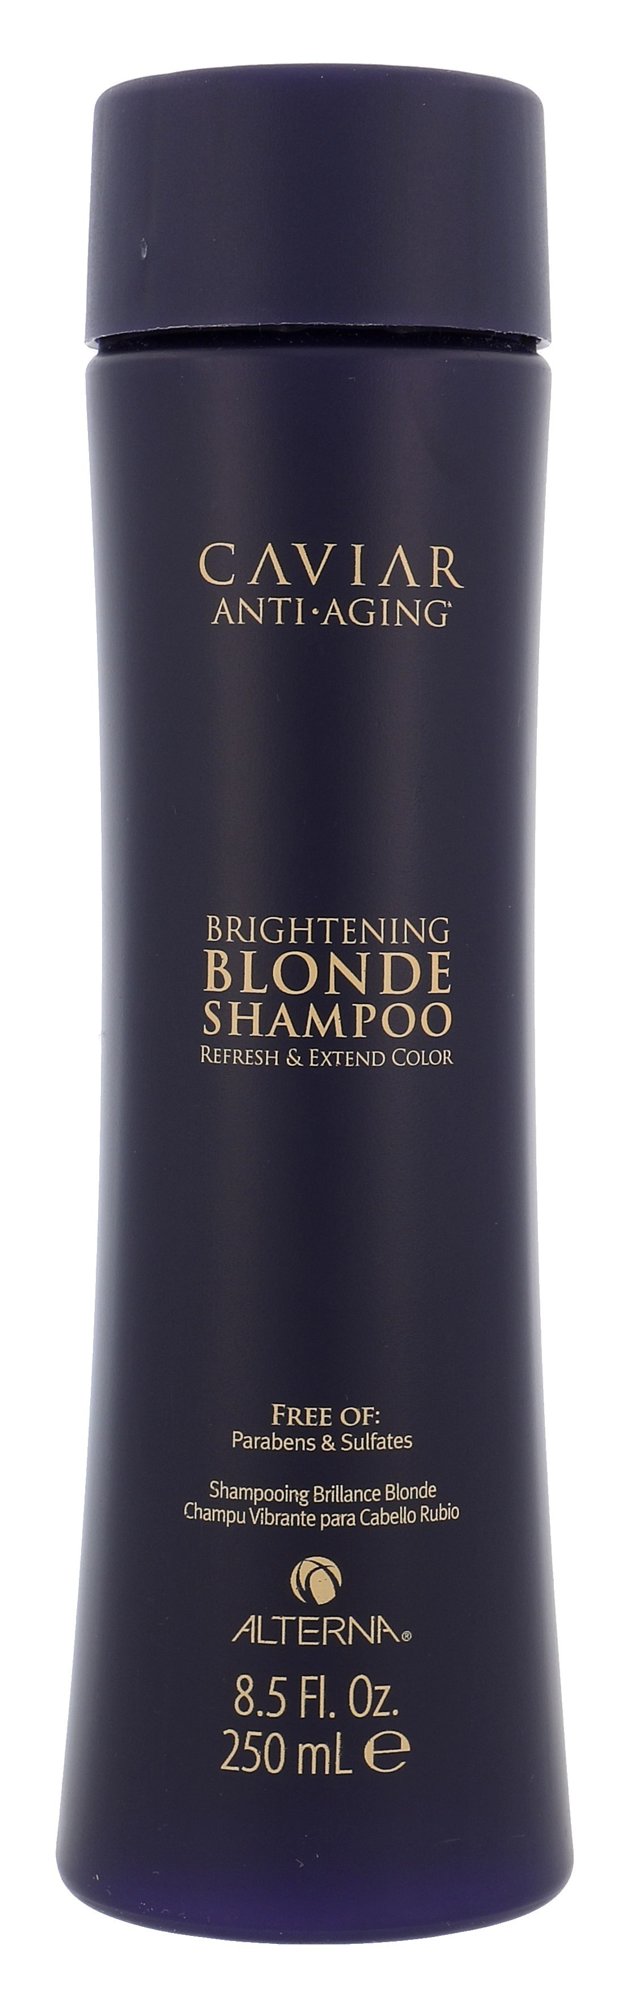 Alterna Caviar Brightening Blonde Shampoo